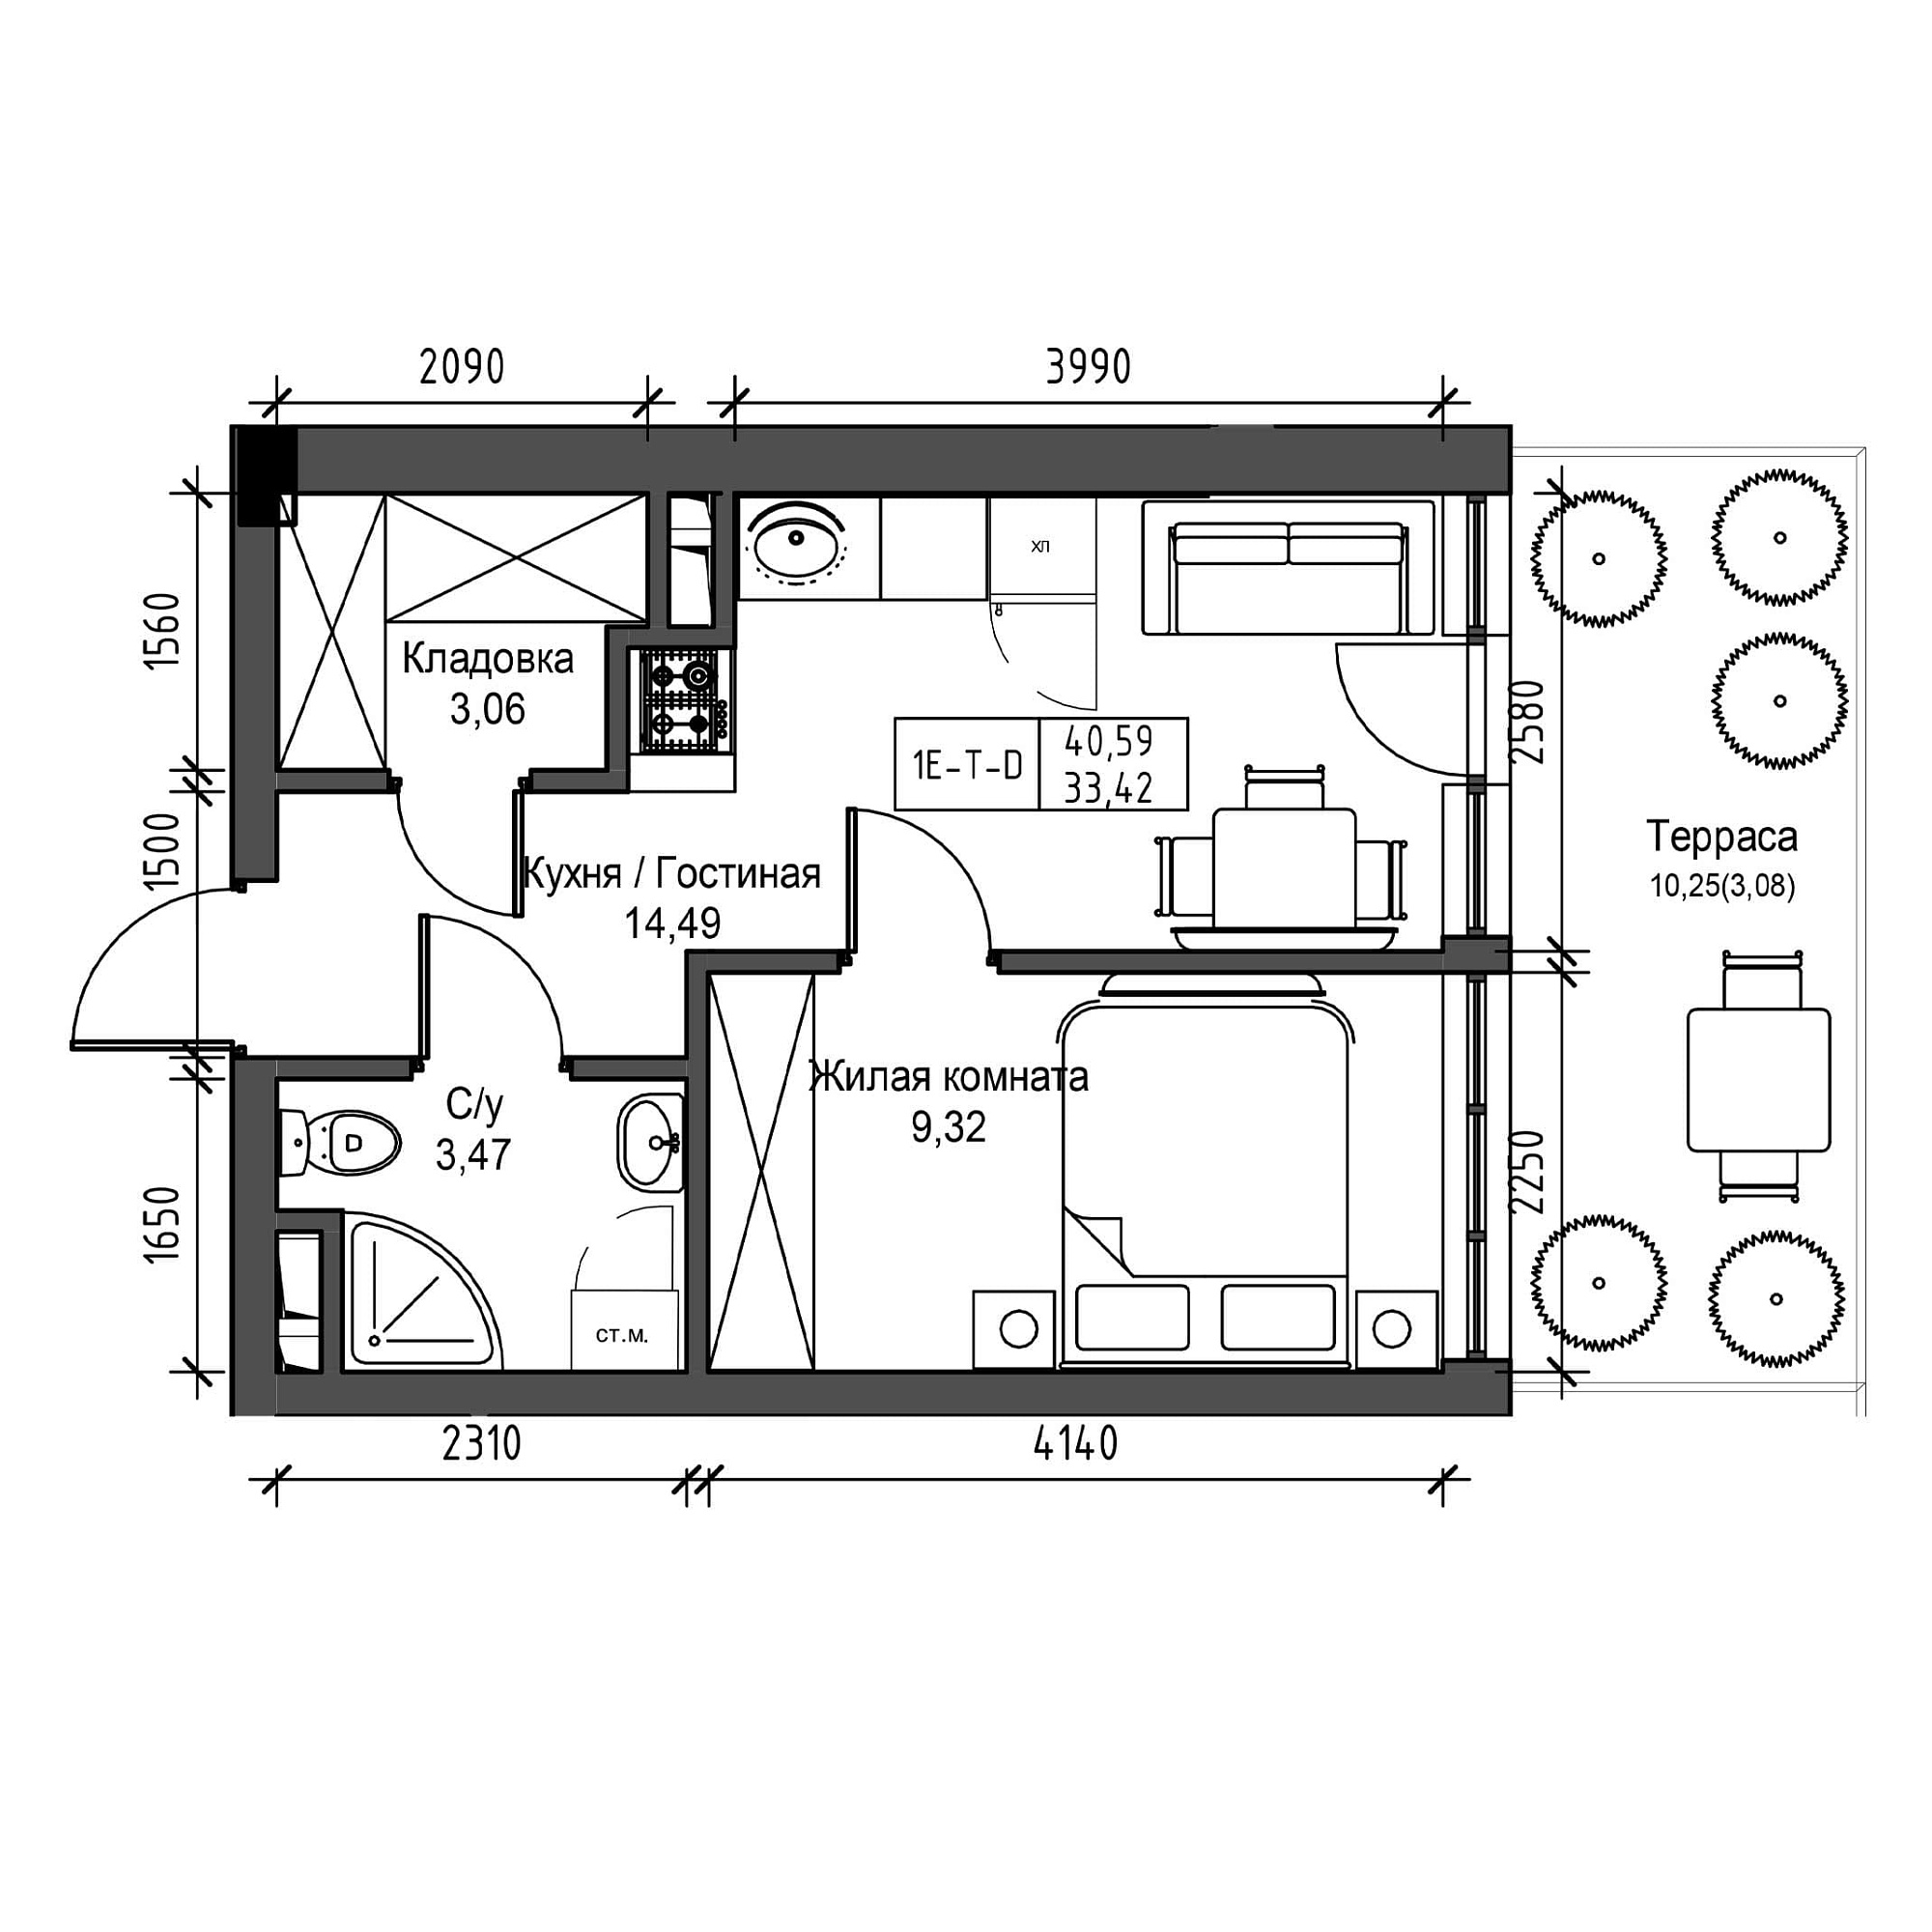 Планування 1-к квартира площею 33.42м2, UM-001-03/0001.